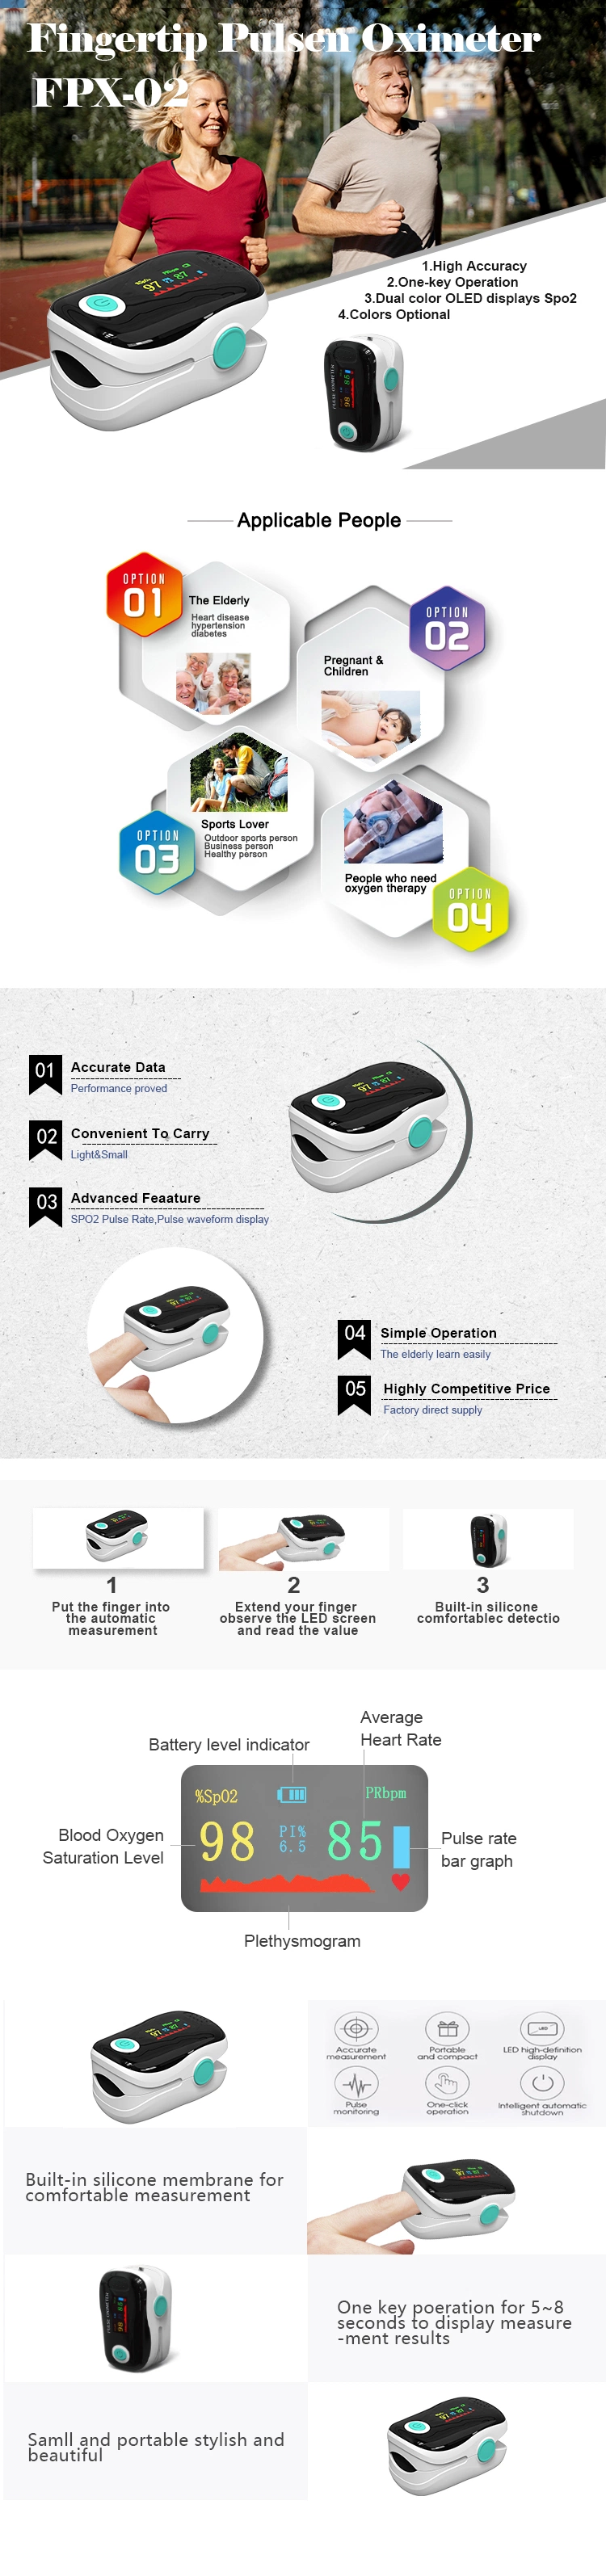 China Factory Existing Stock Portable SpO2 Medical Digital Fingertip Pulse Oximeter for Children Adults